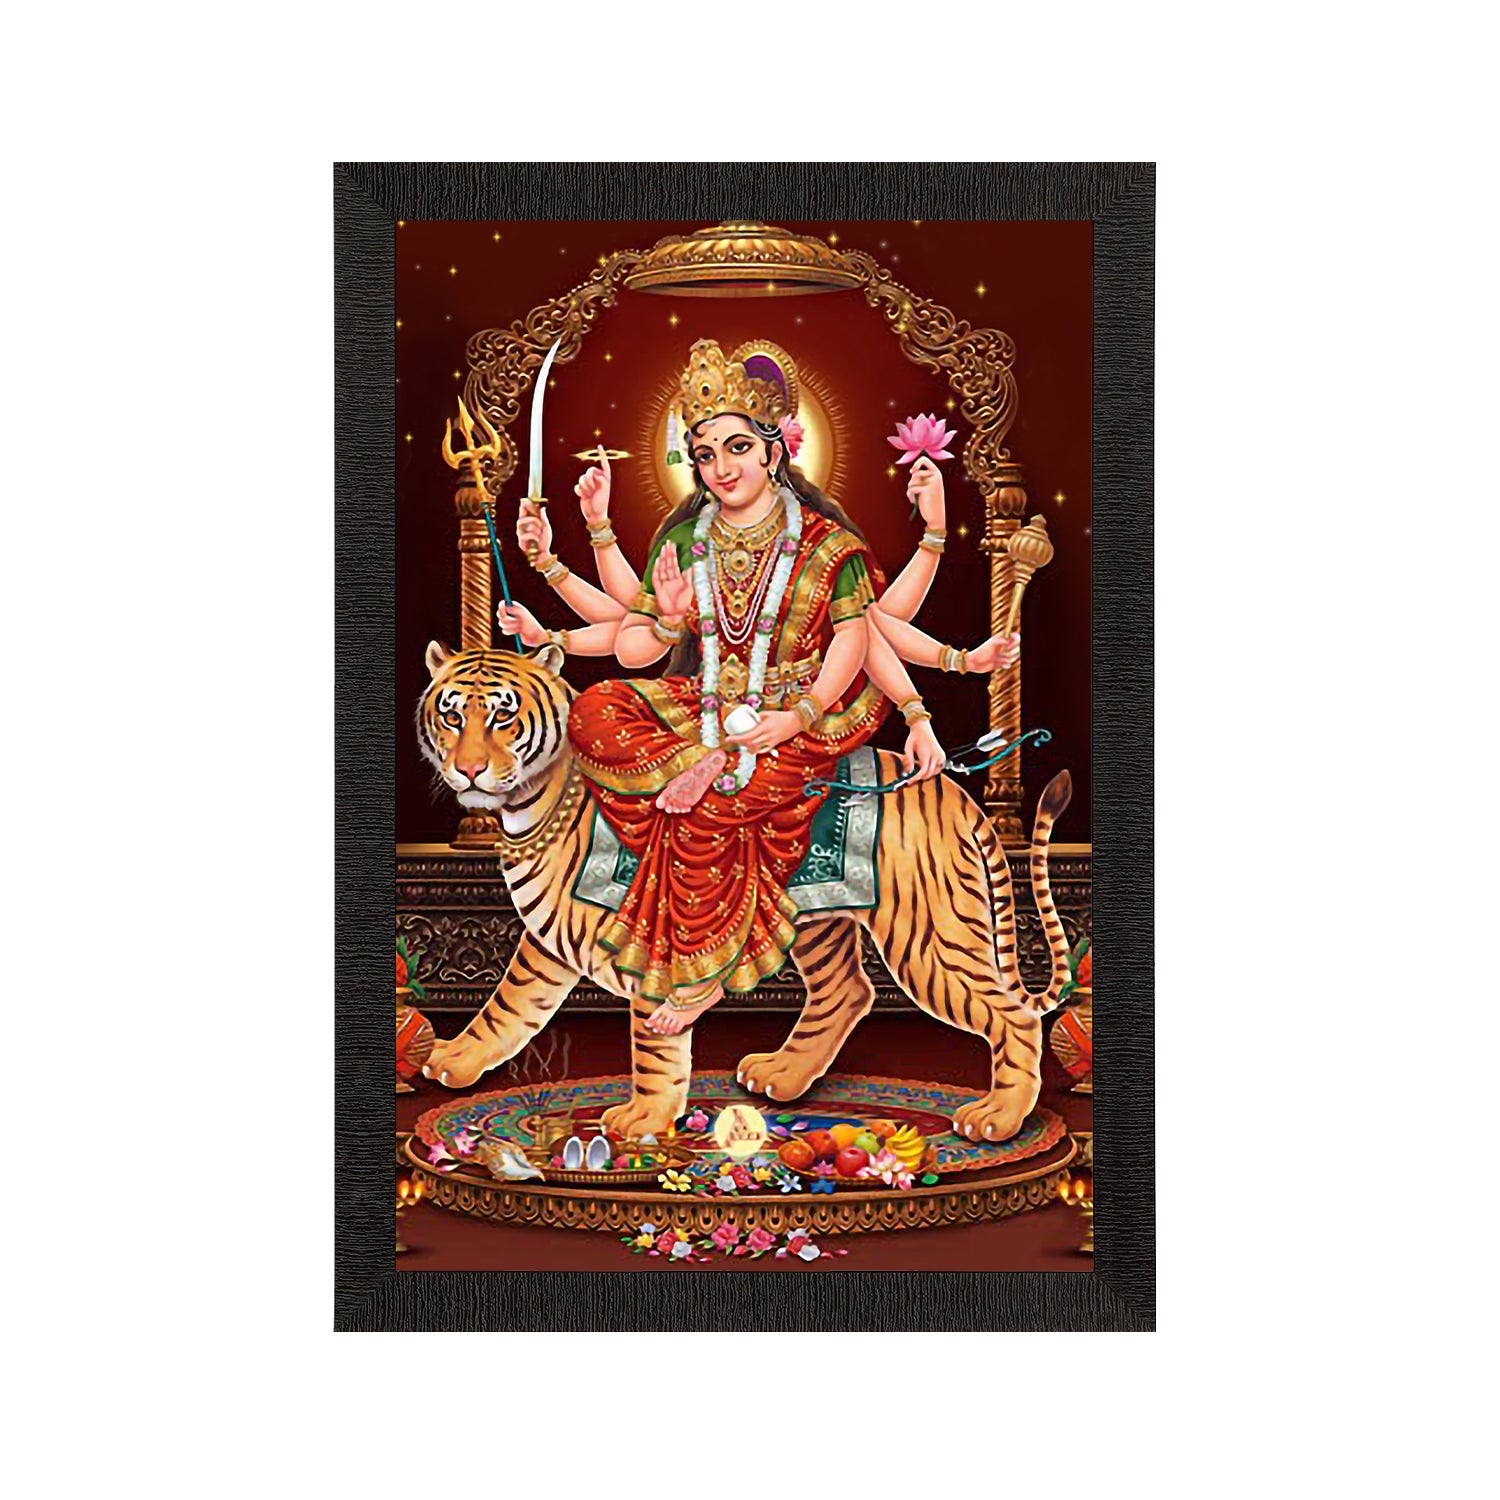 Goddess Durga Maa Sitting On Tiger Painting Digital Printed Religious Wall Art